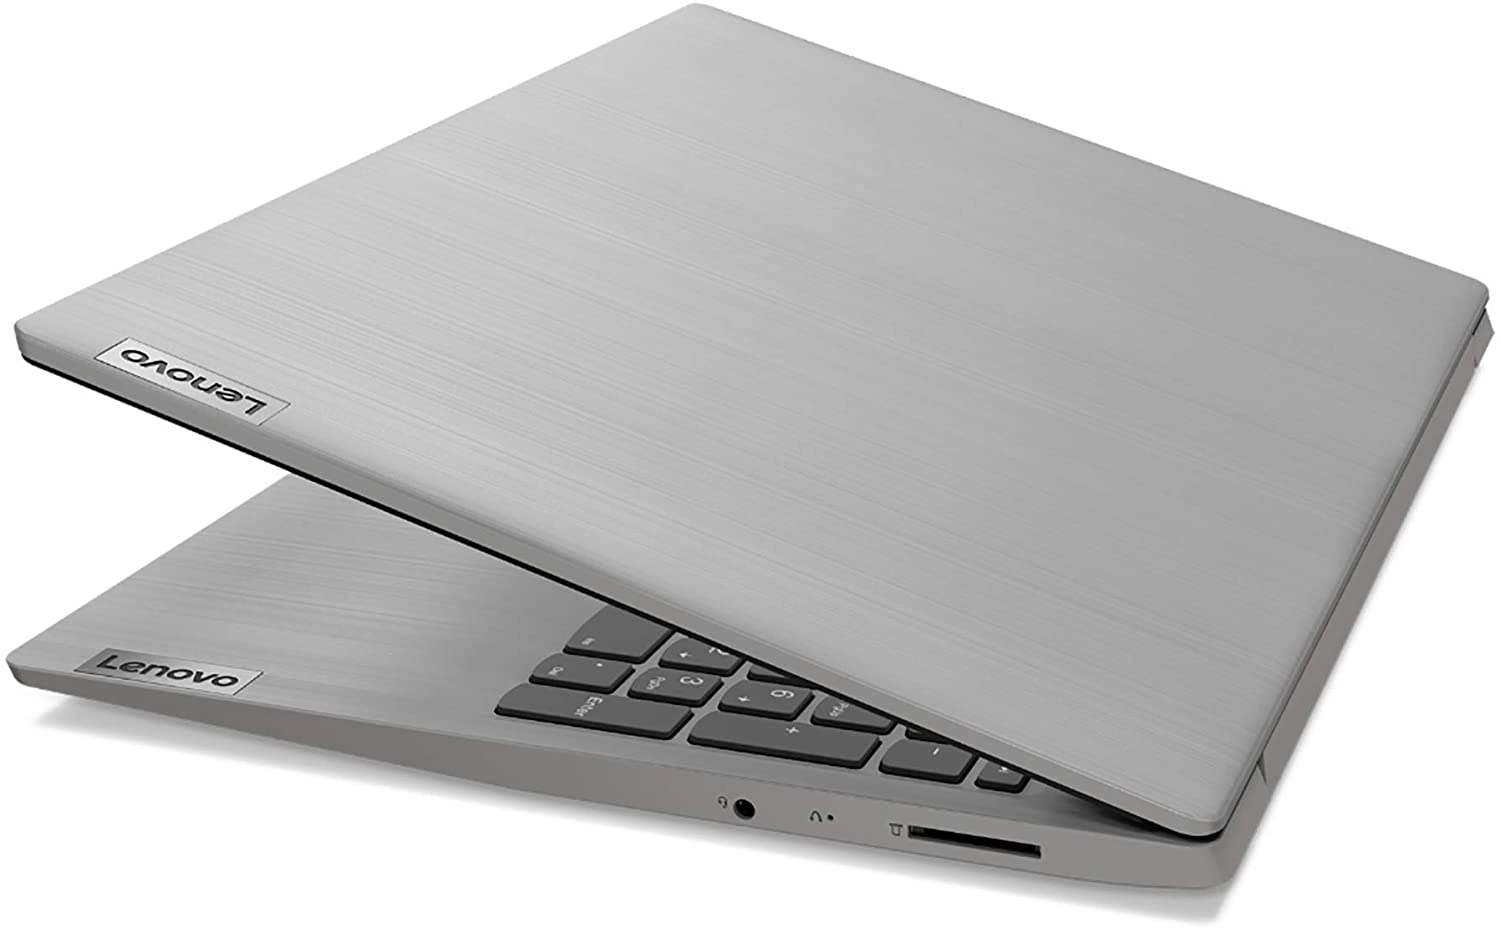 Lenovo IdeaPad 3 15ADA05 laptop image